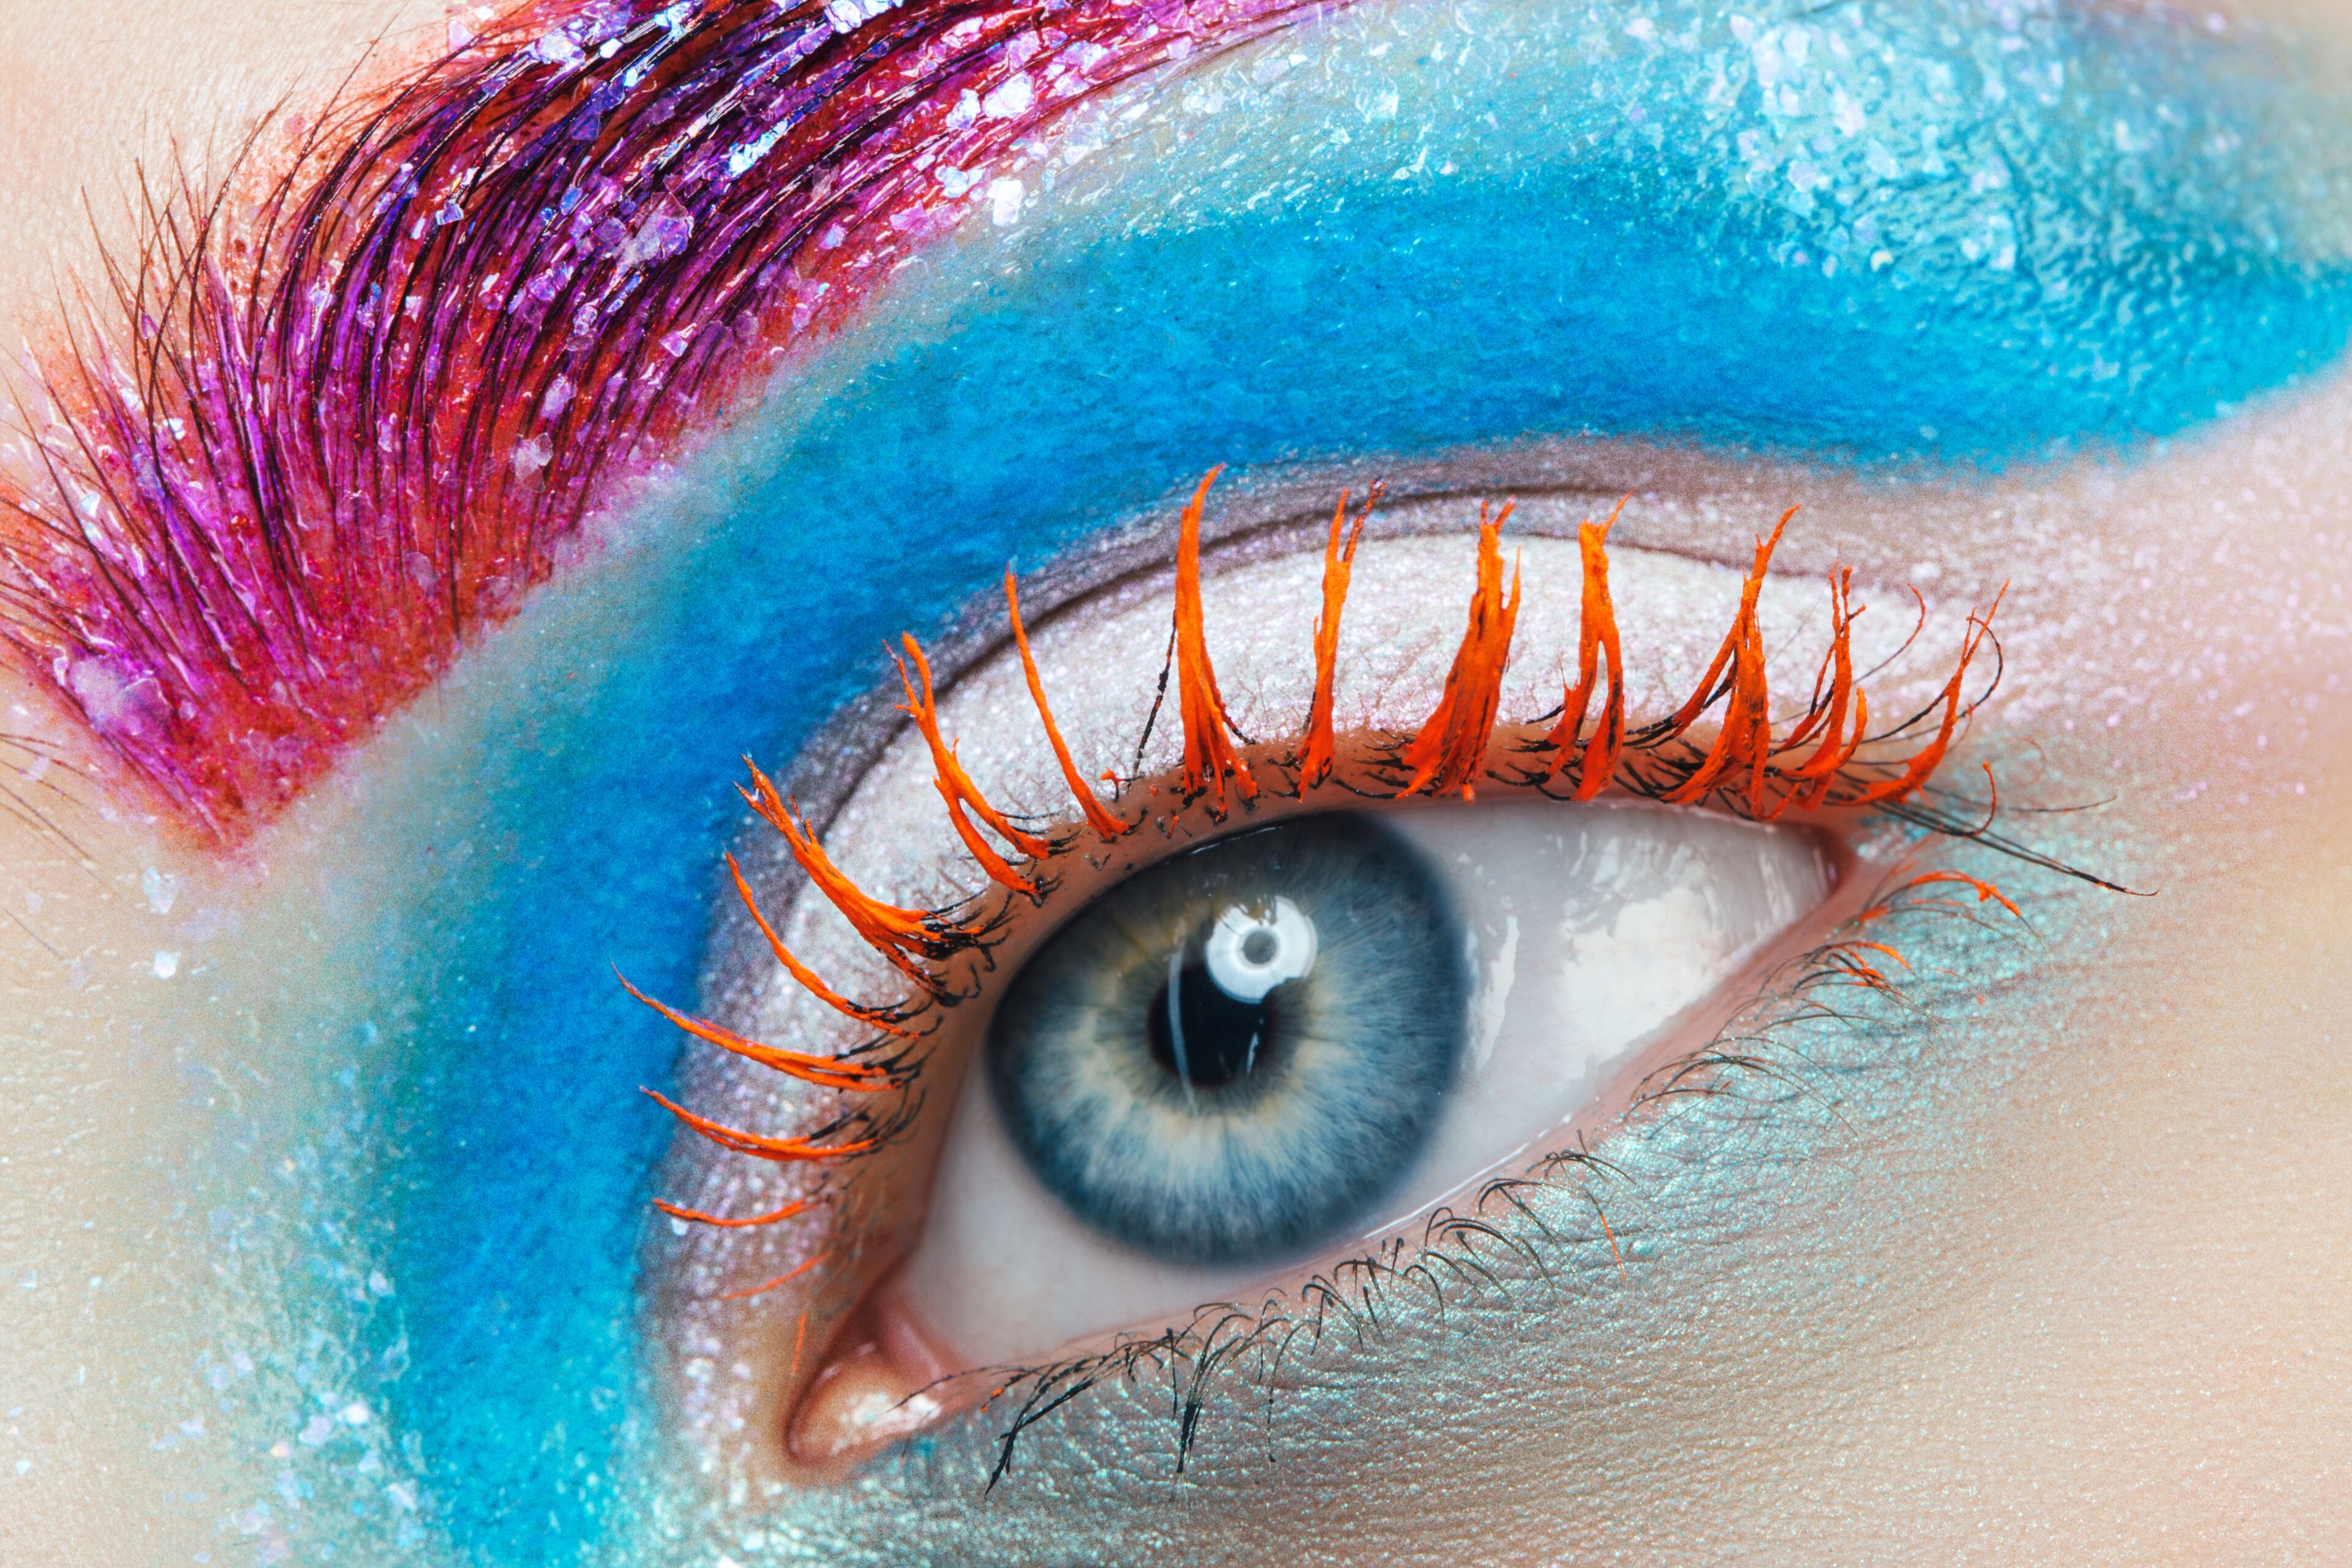 Close-up of a human eye with vibrant blue and pink eyeshadow, glitter, and orange mascara on eyelashes.